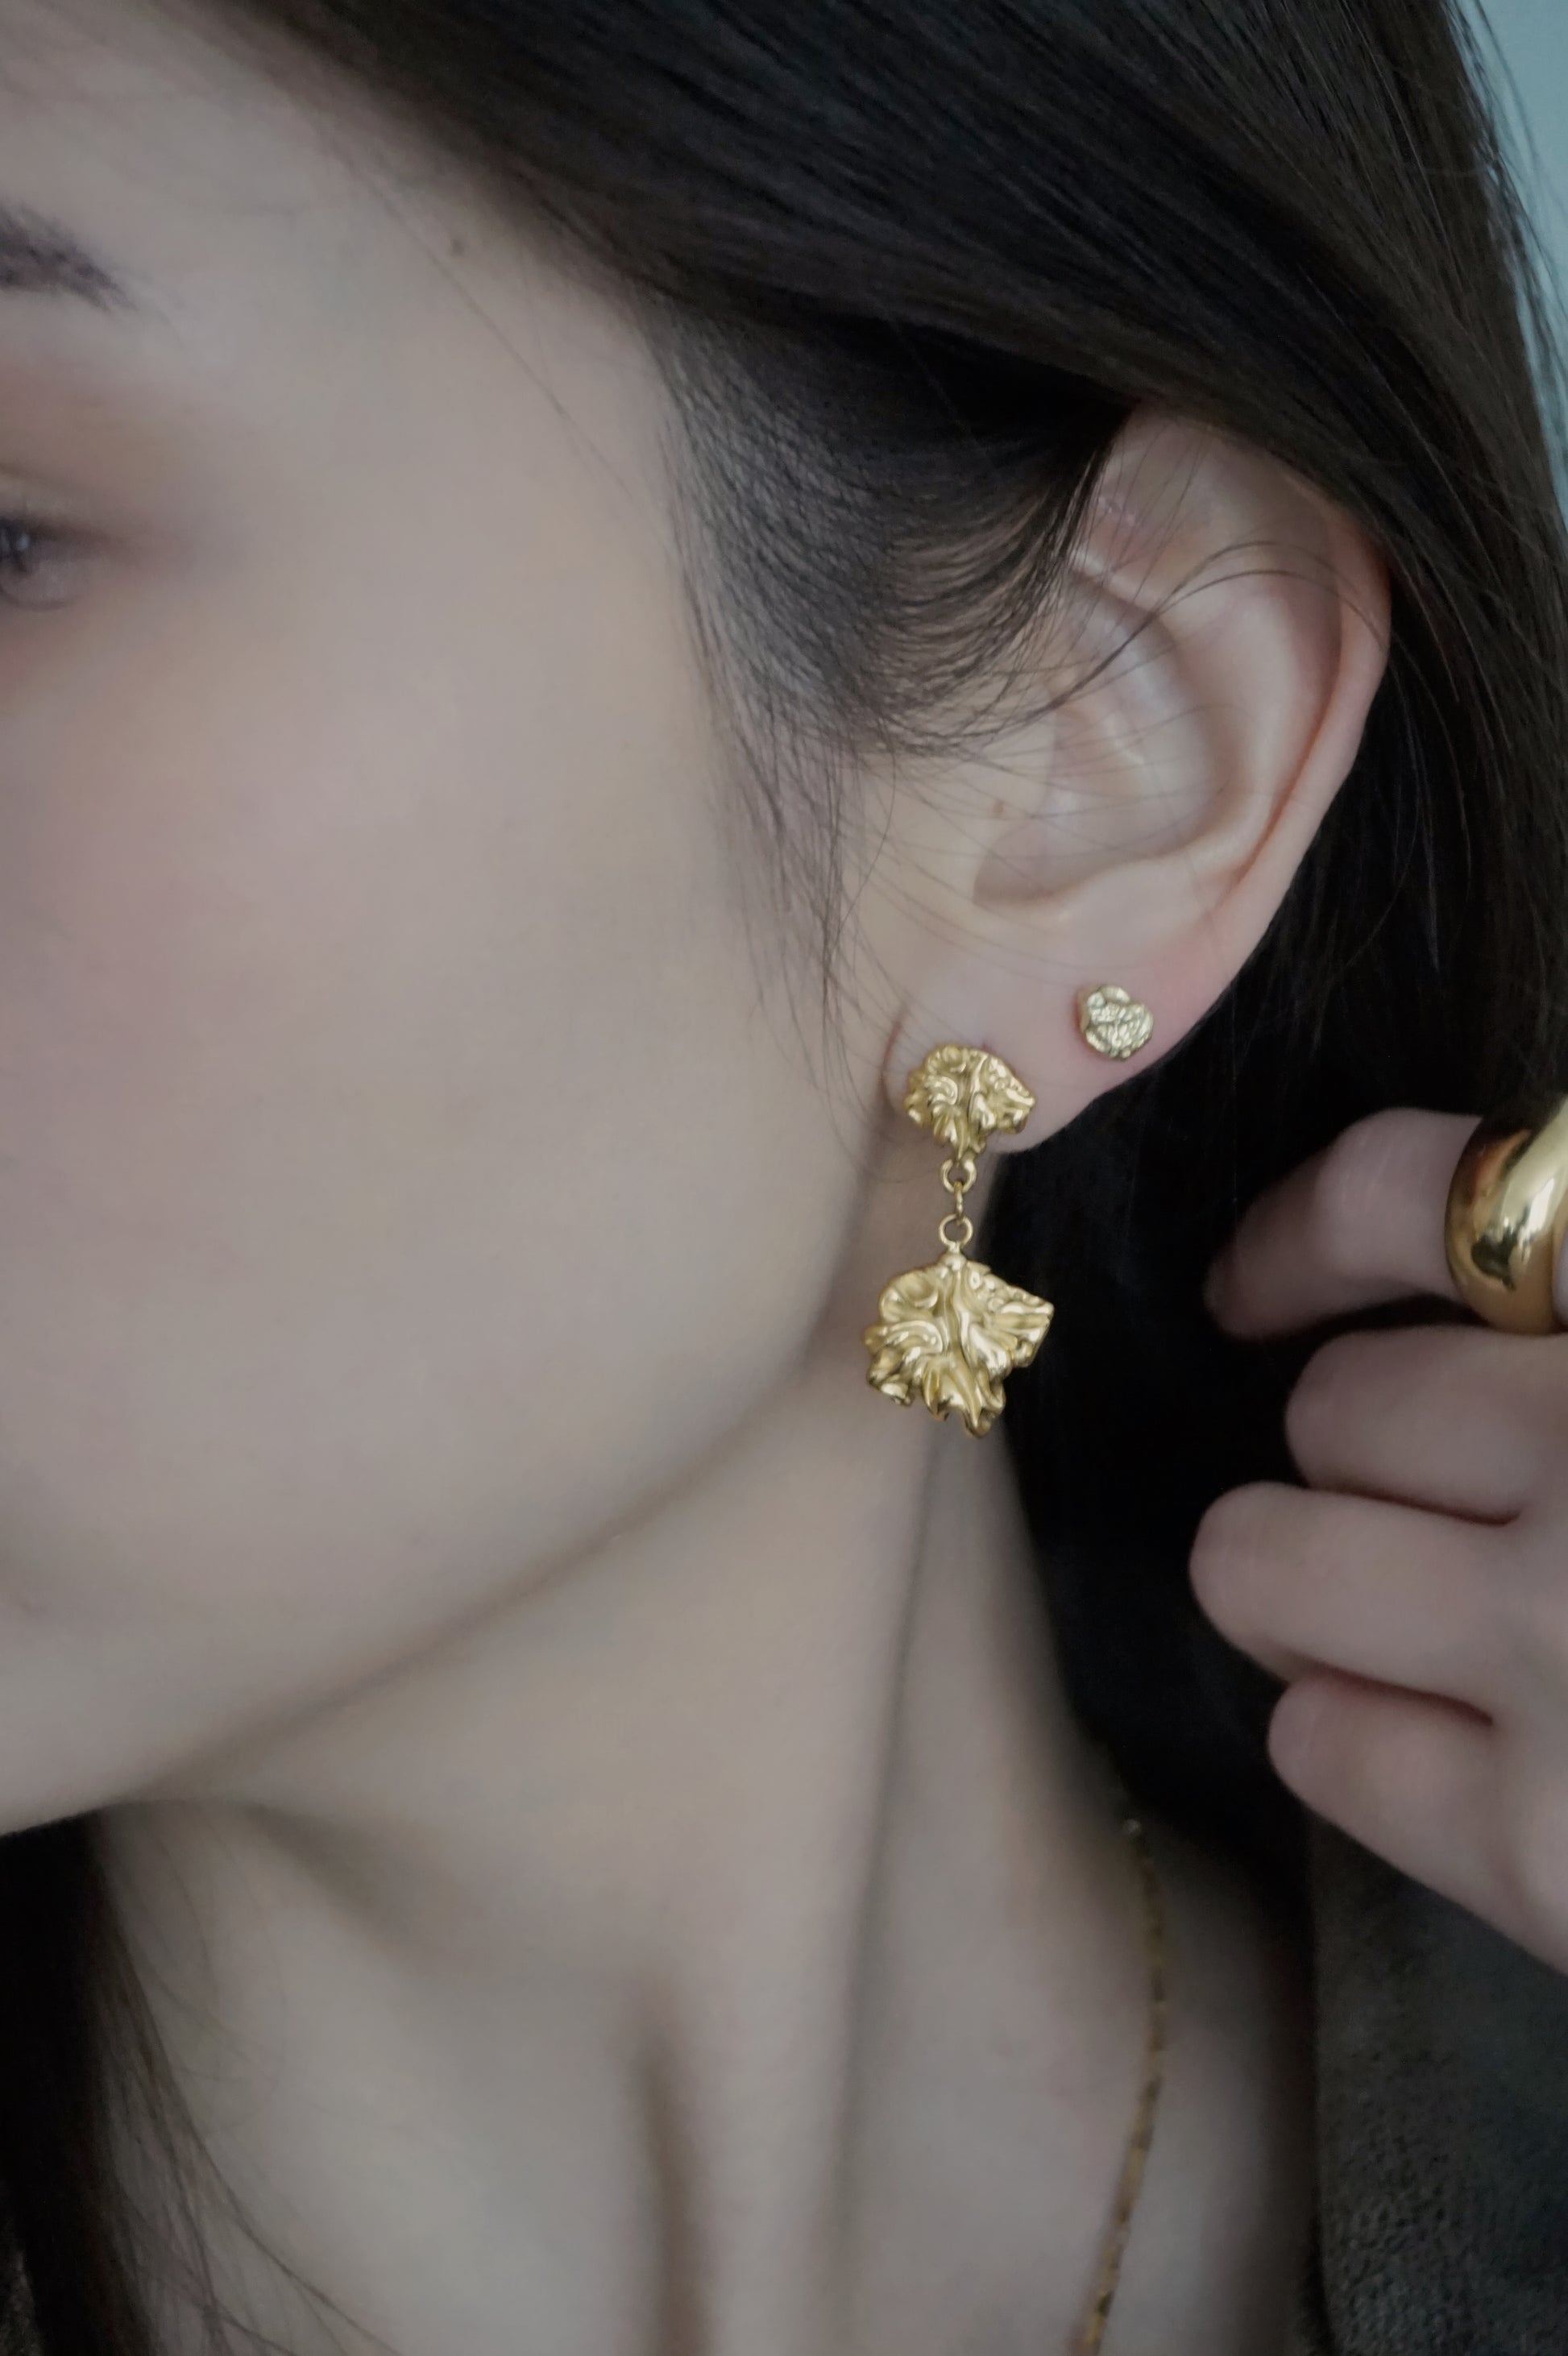 Ripple Earrings from Third Tone. Fall jewelry, fall jewelry for cold weather. Elegant earrings for weddings.